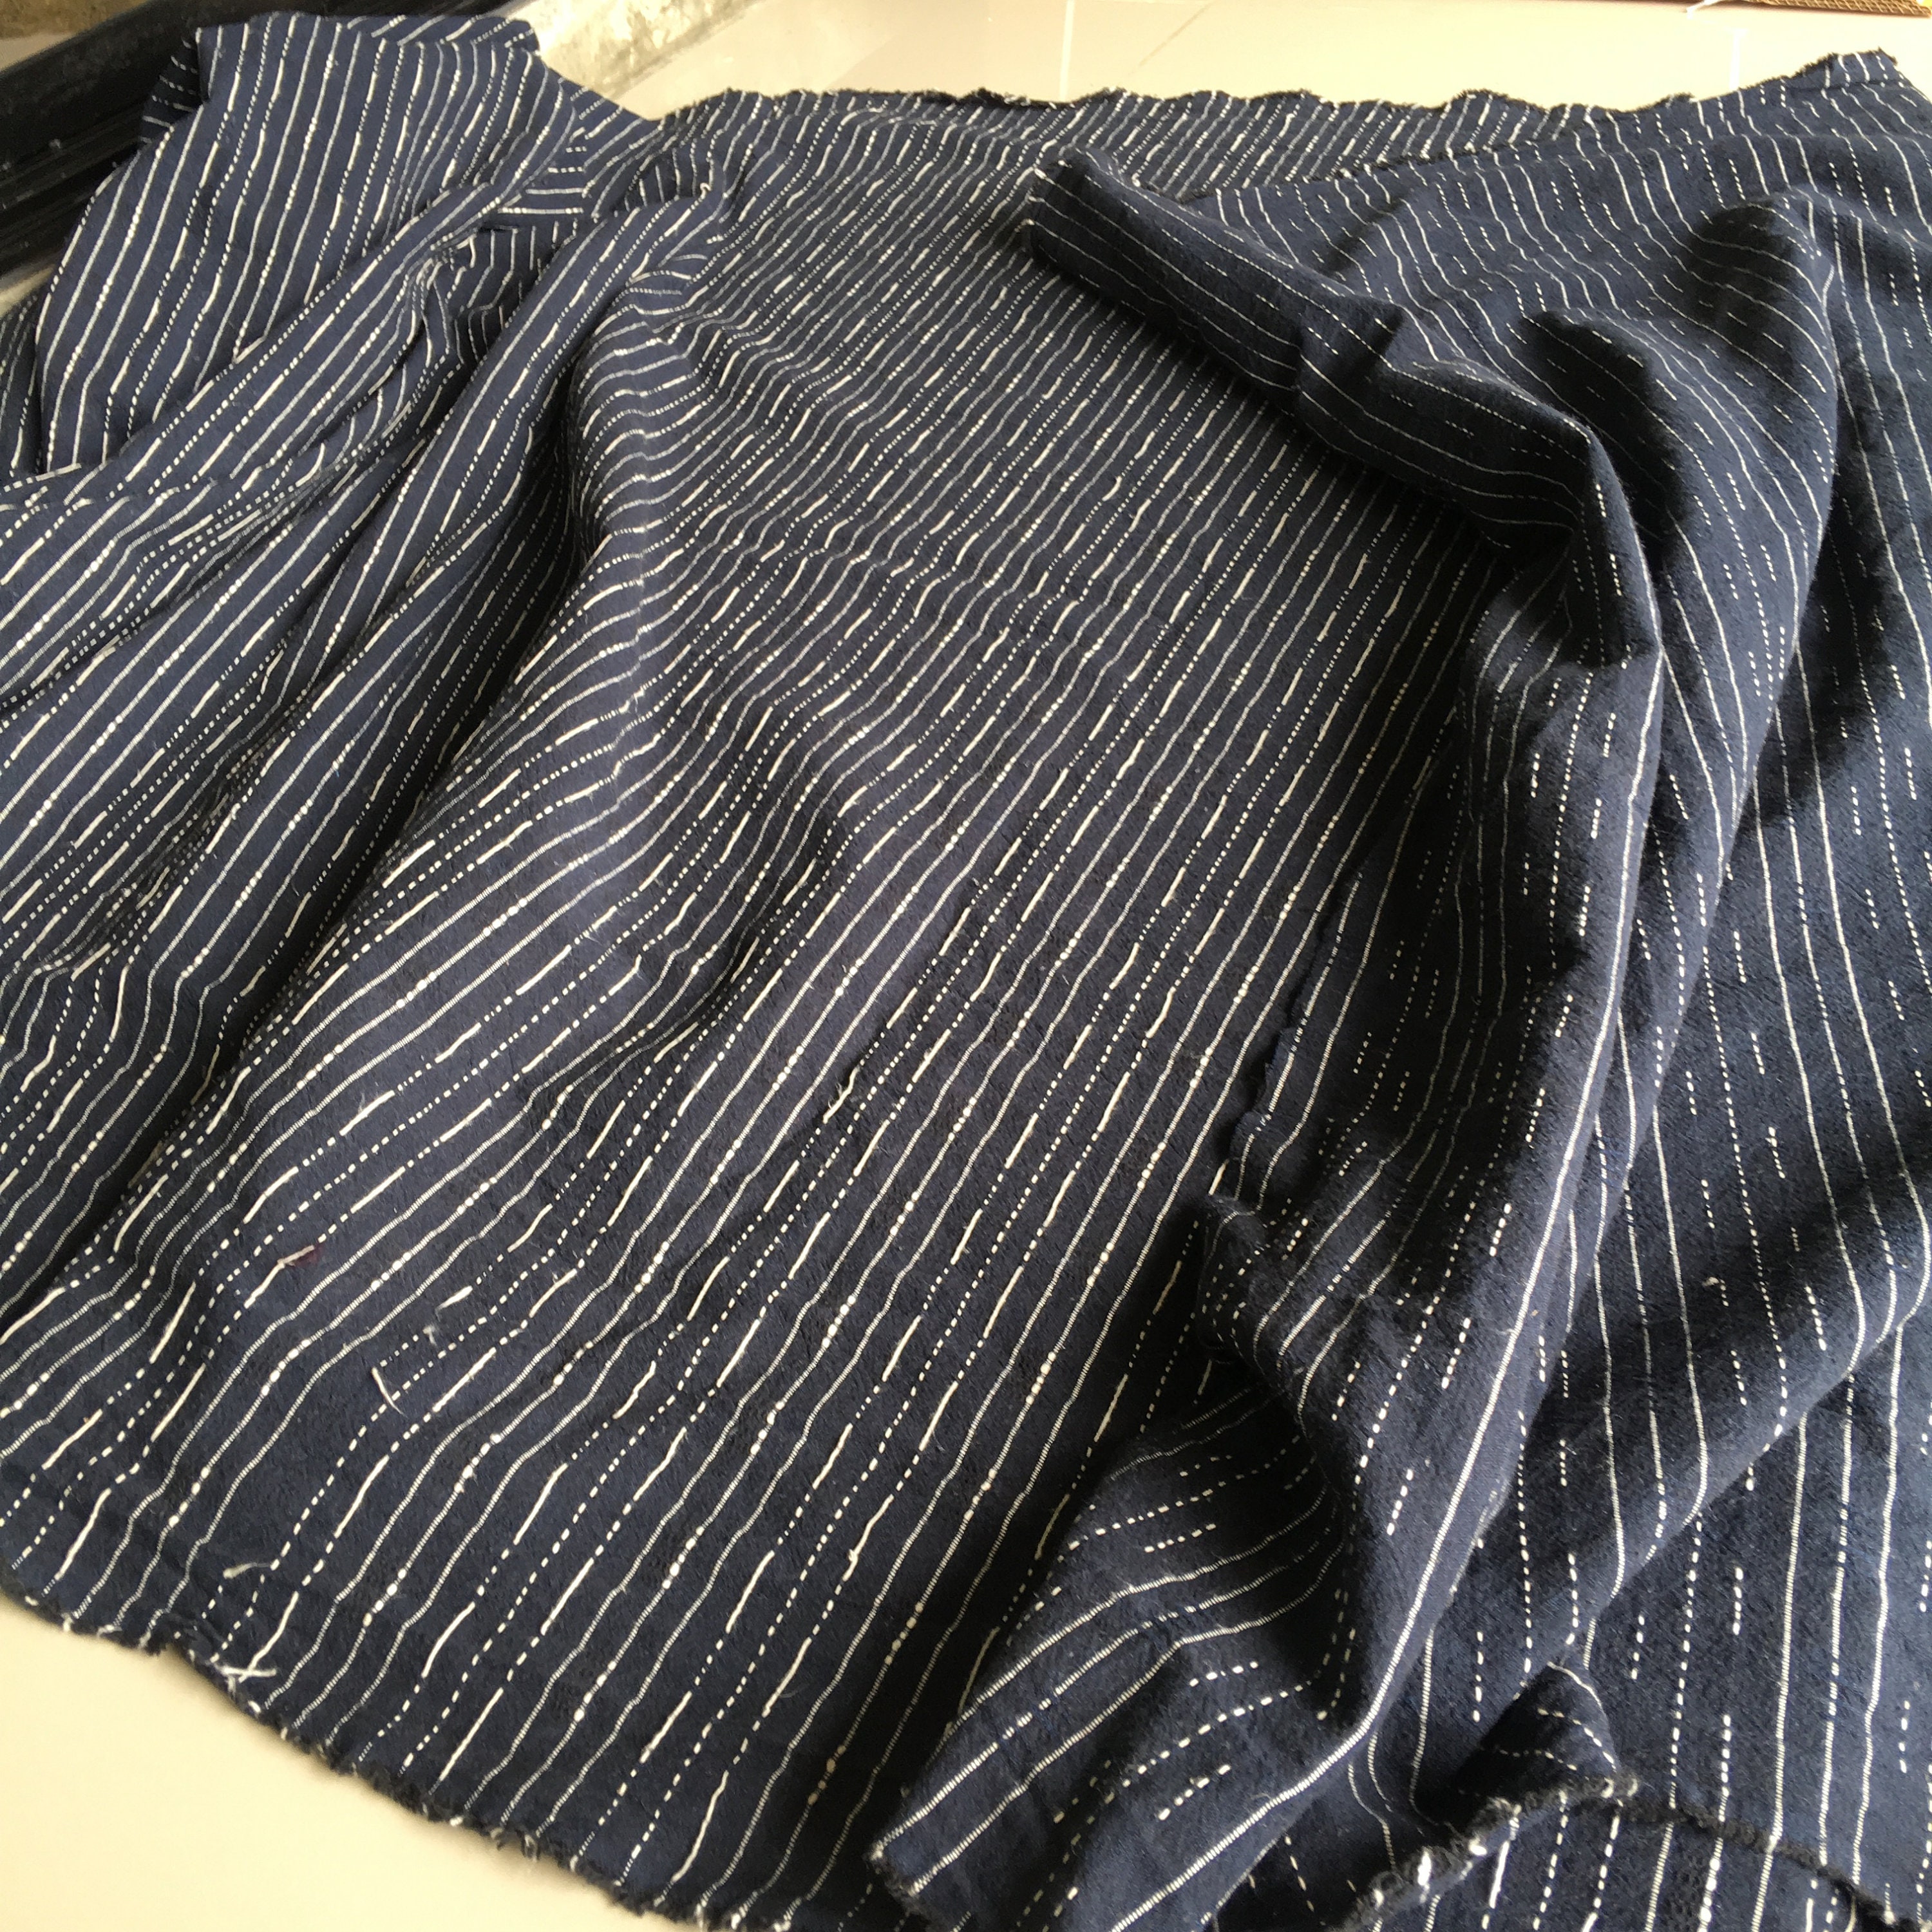 The Chiangmai native cotton fabric natural cotton dark blue | Etsy